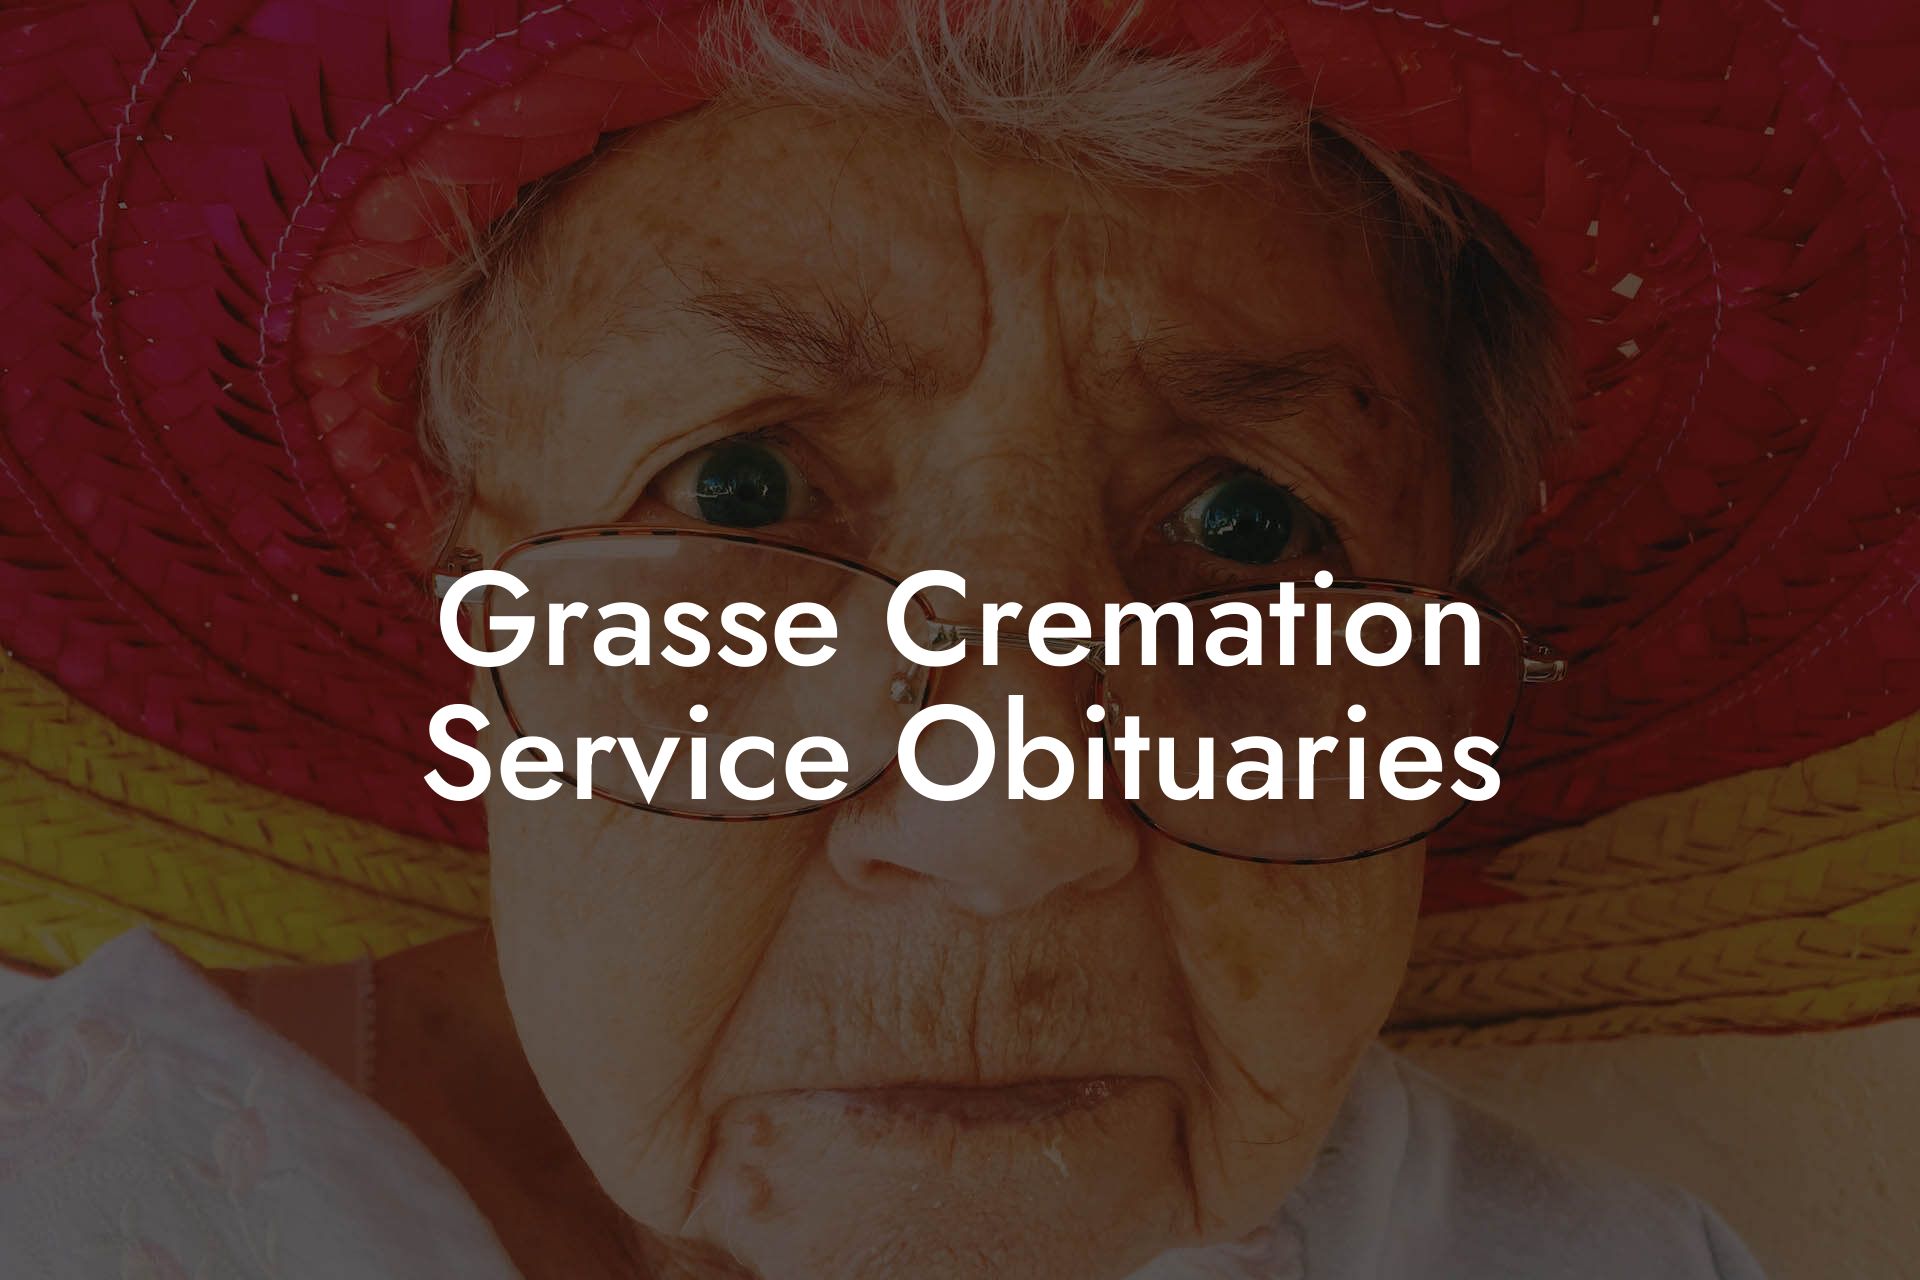 Grasse Cremation Service Obituaries